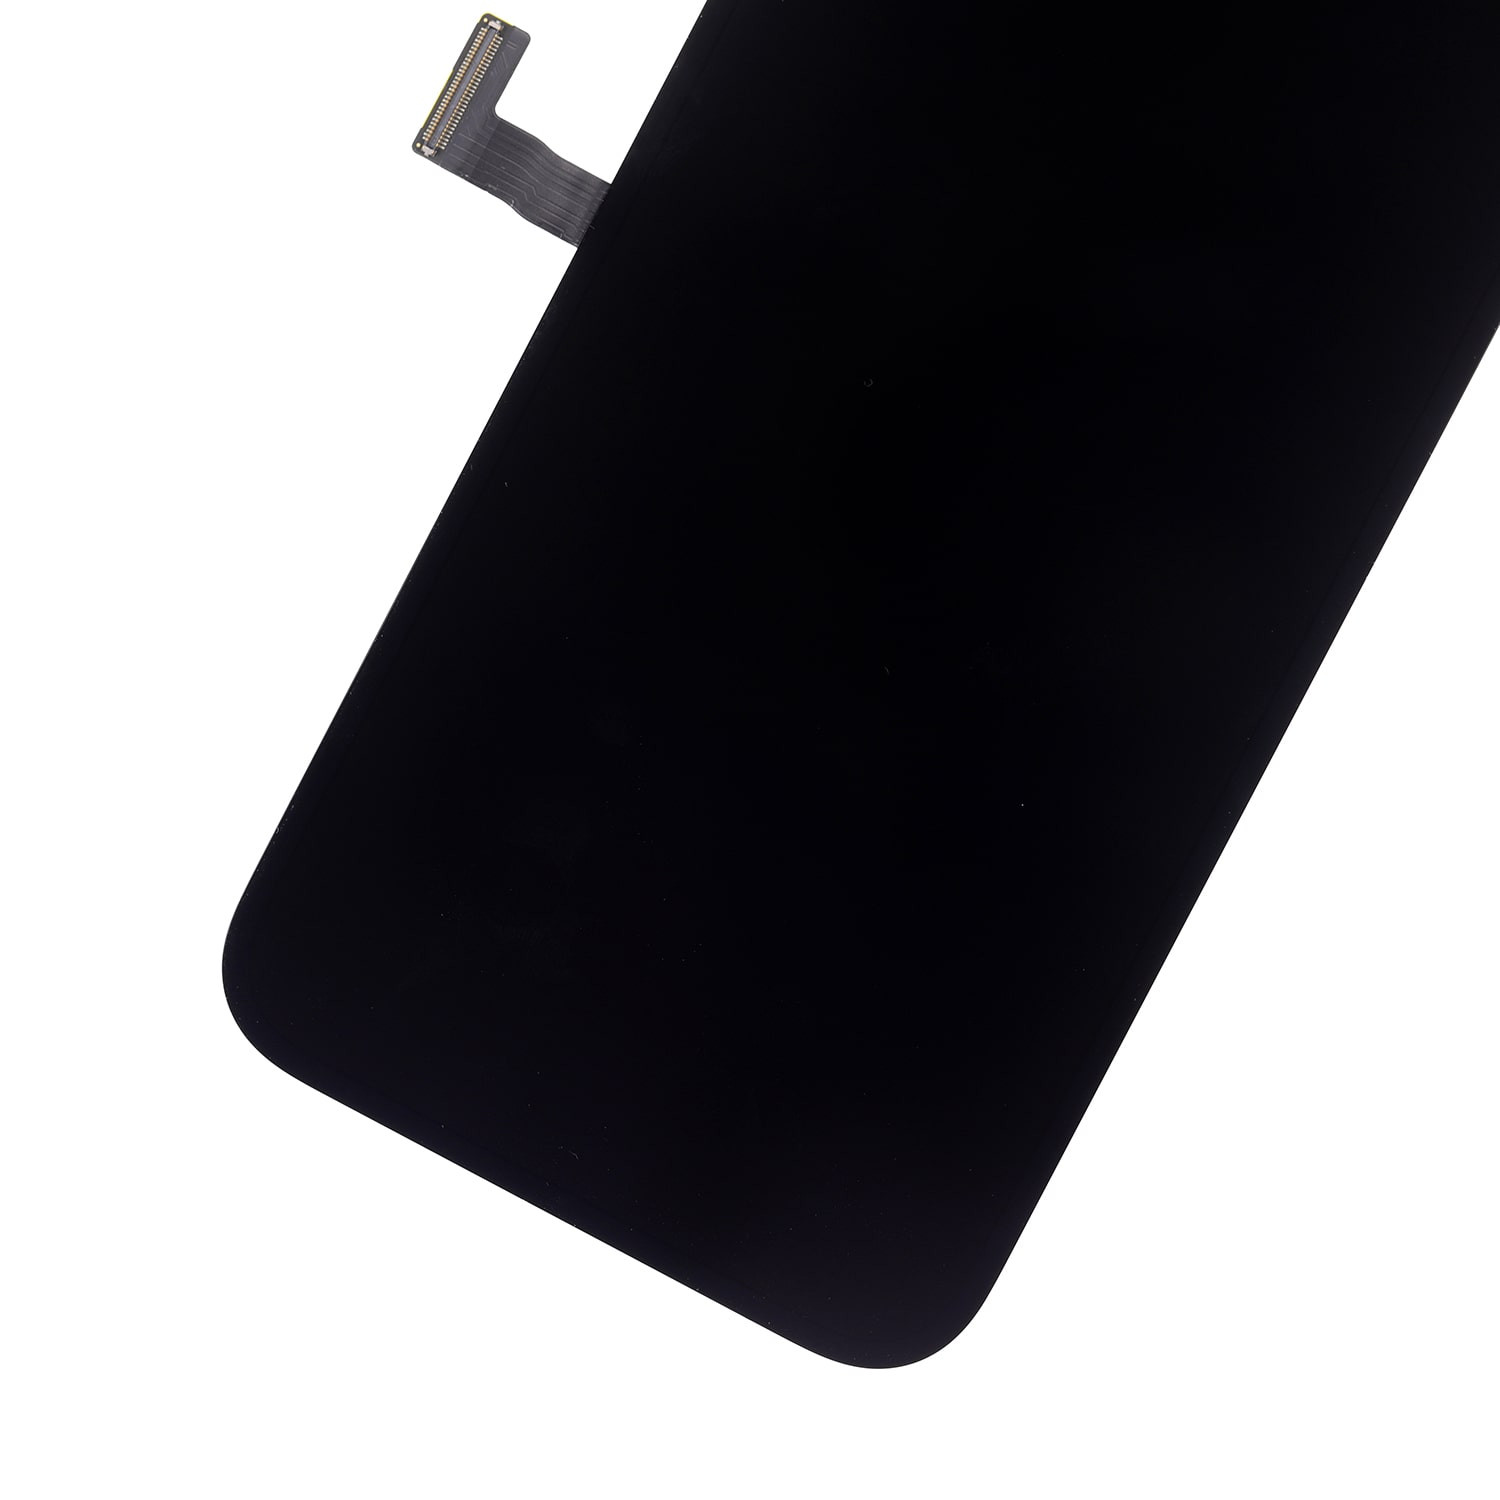 Penggantian Skrin Pemasangan OLED Untuk iPhone 13 Pro - 4 